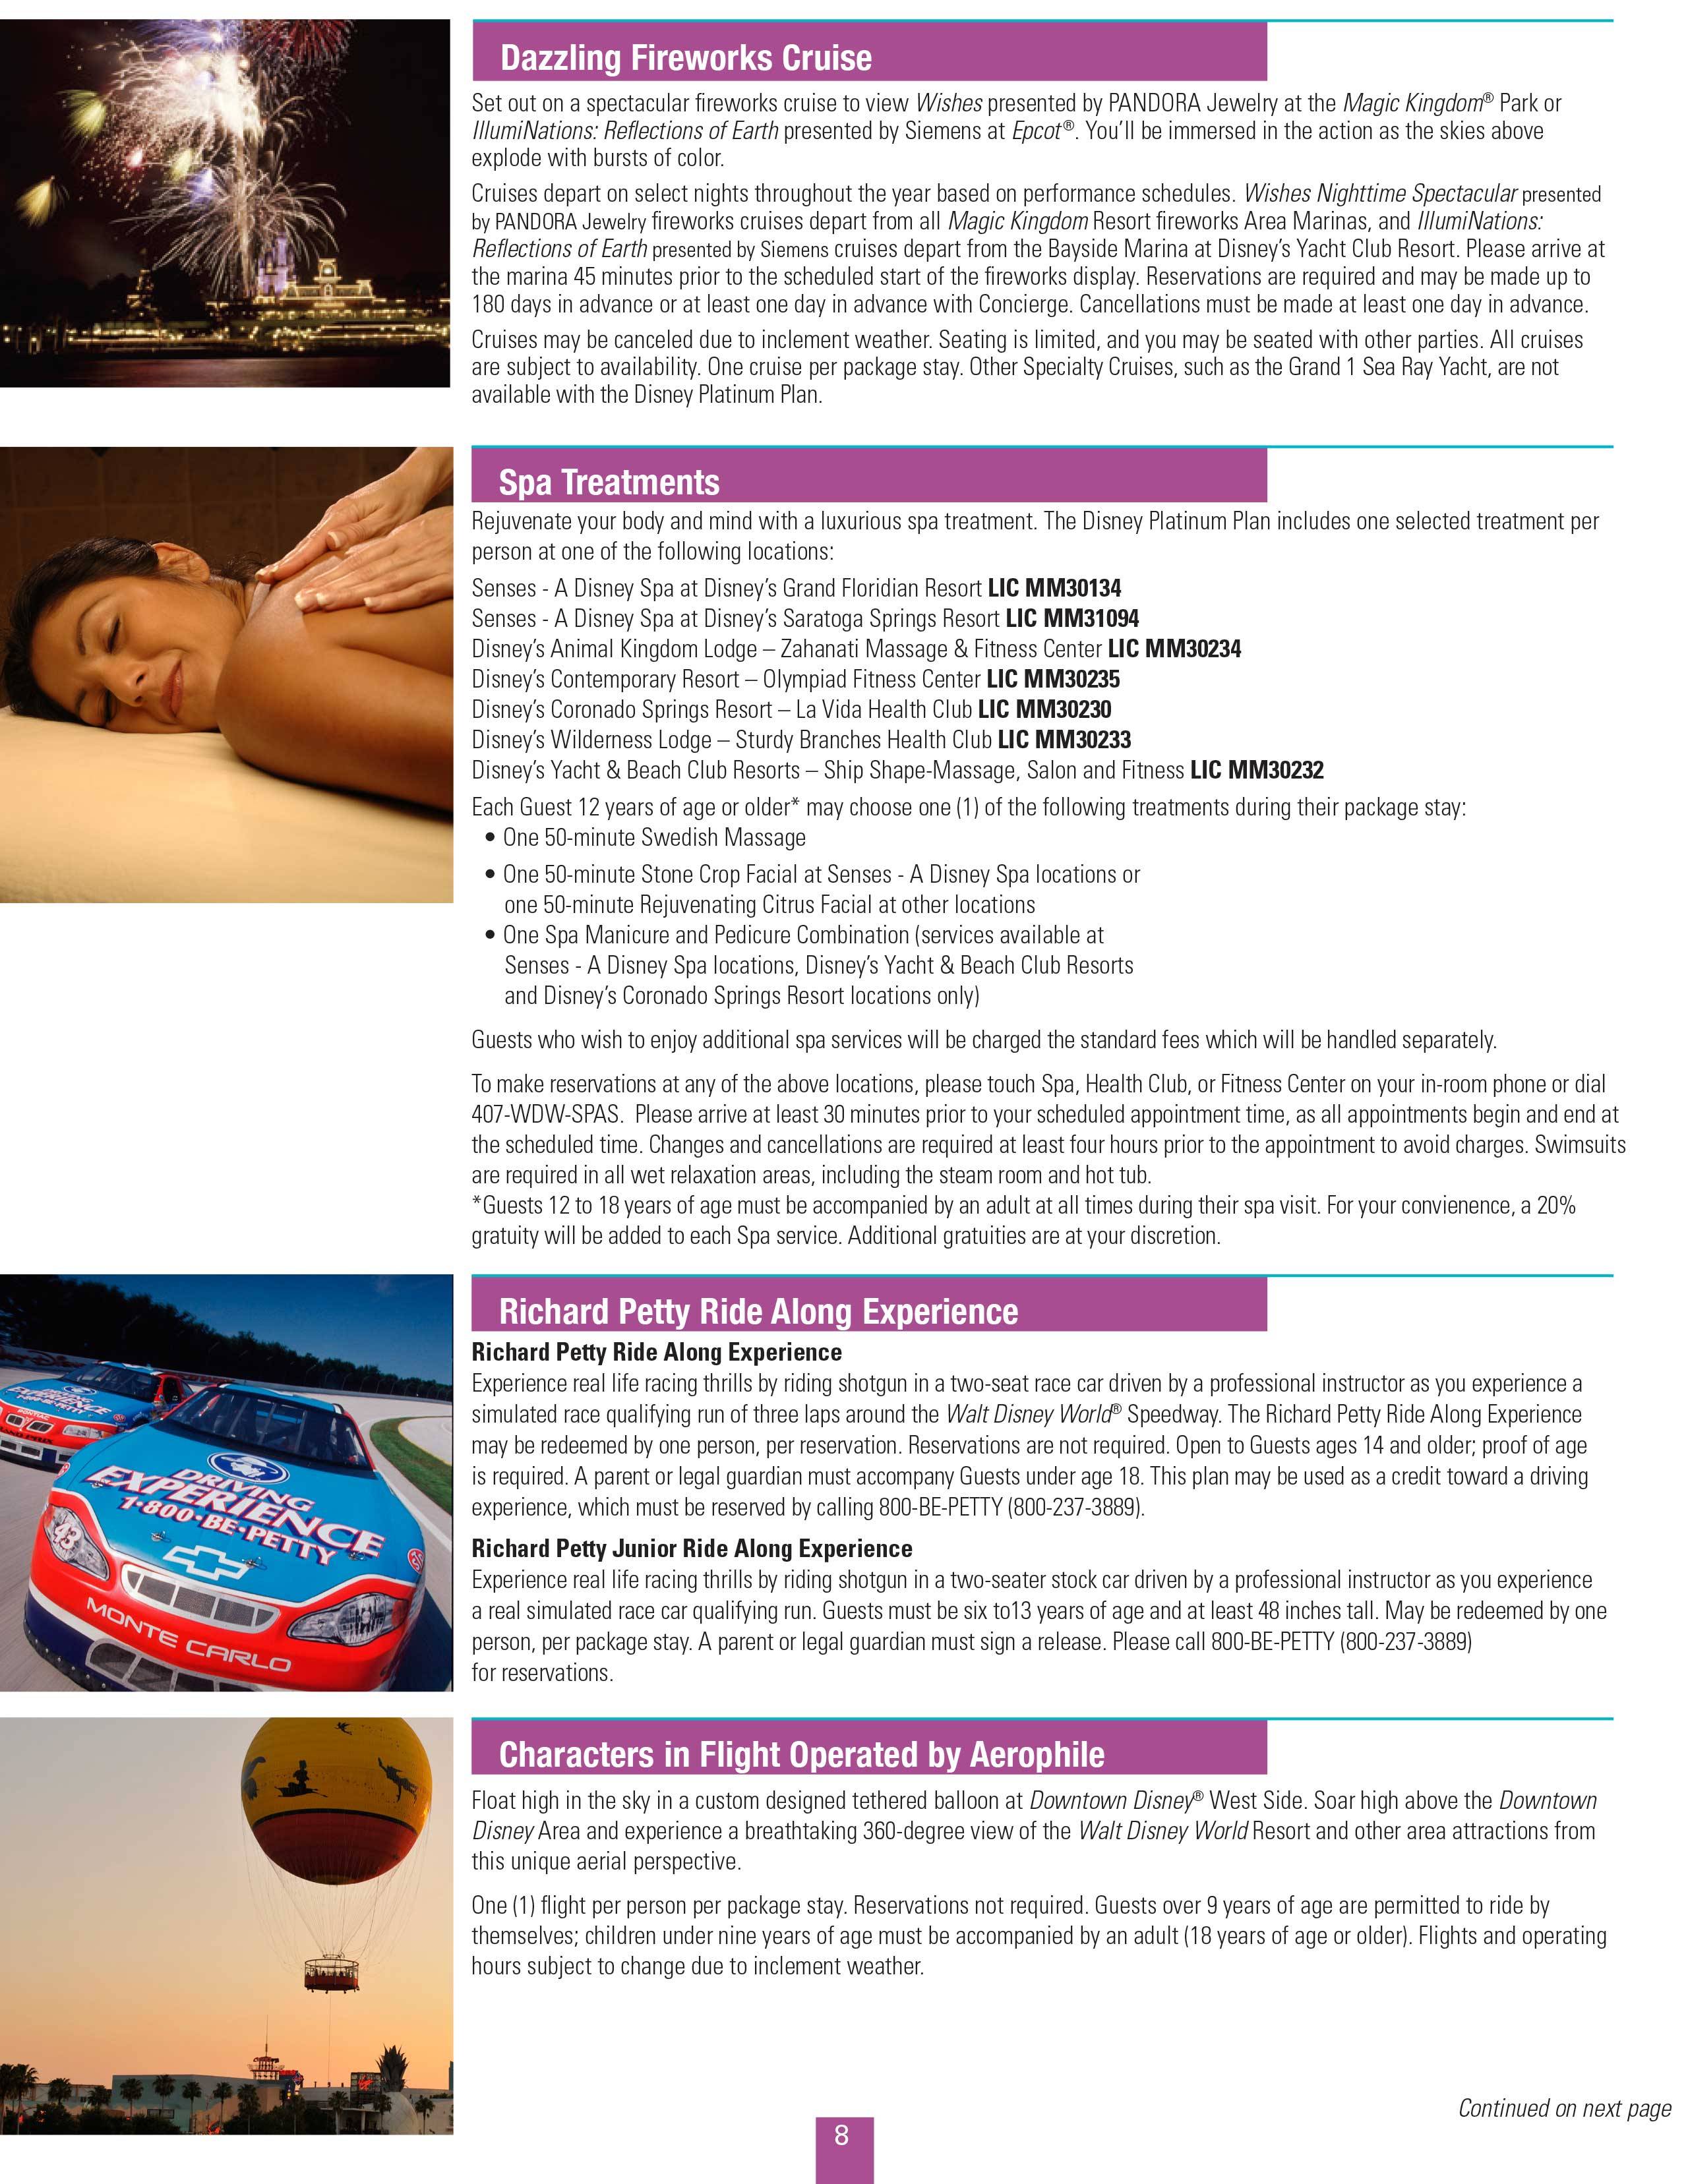 2015 Disney Platinum Plan brochure - Page 9